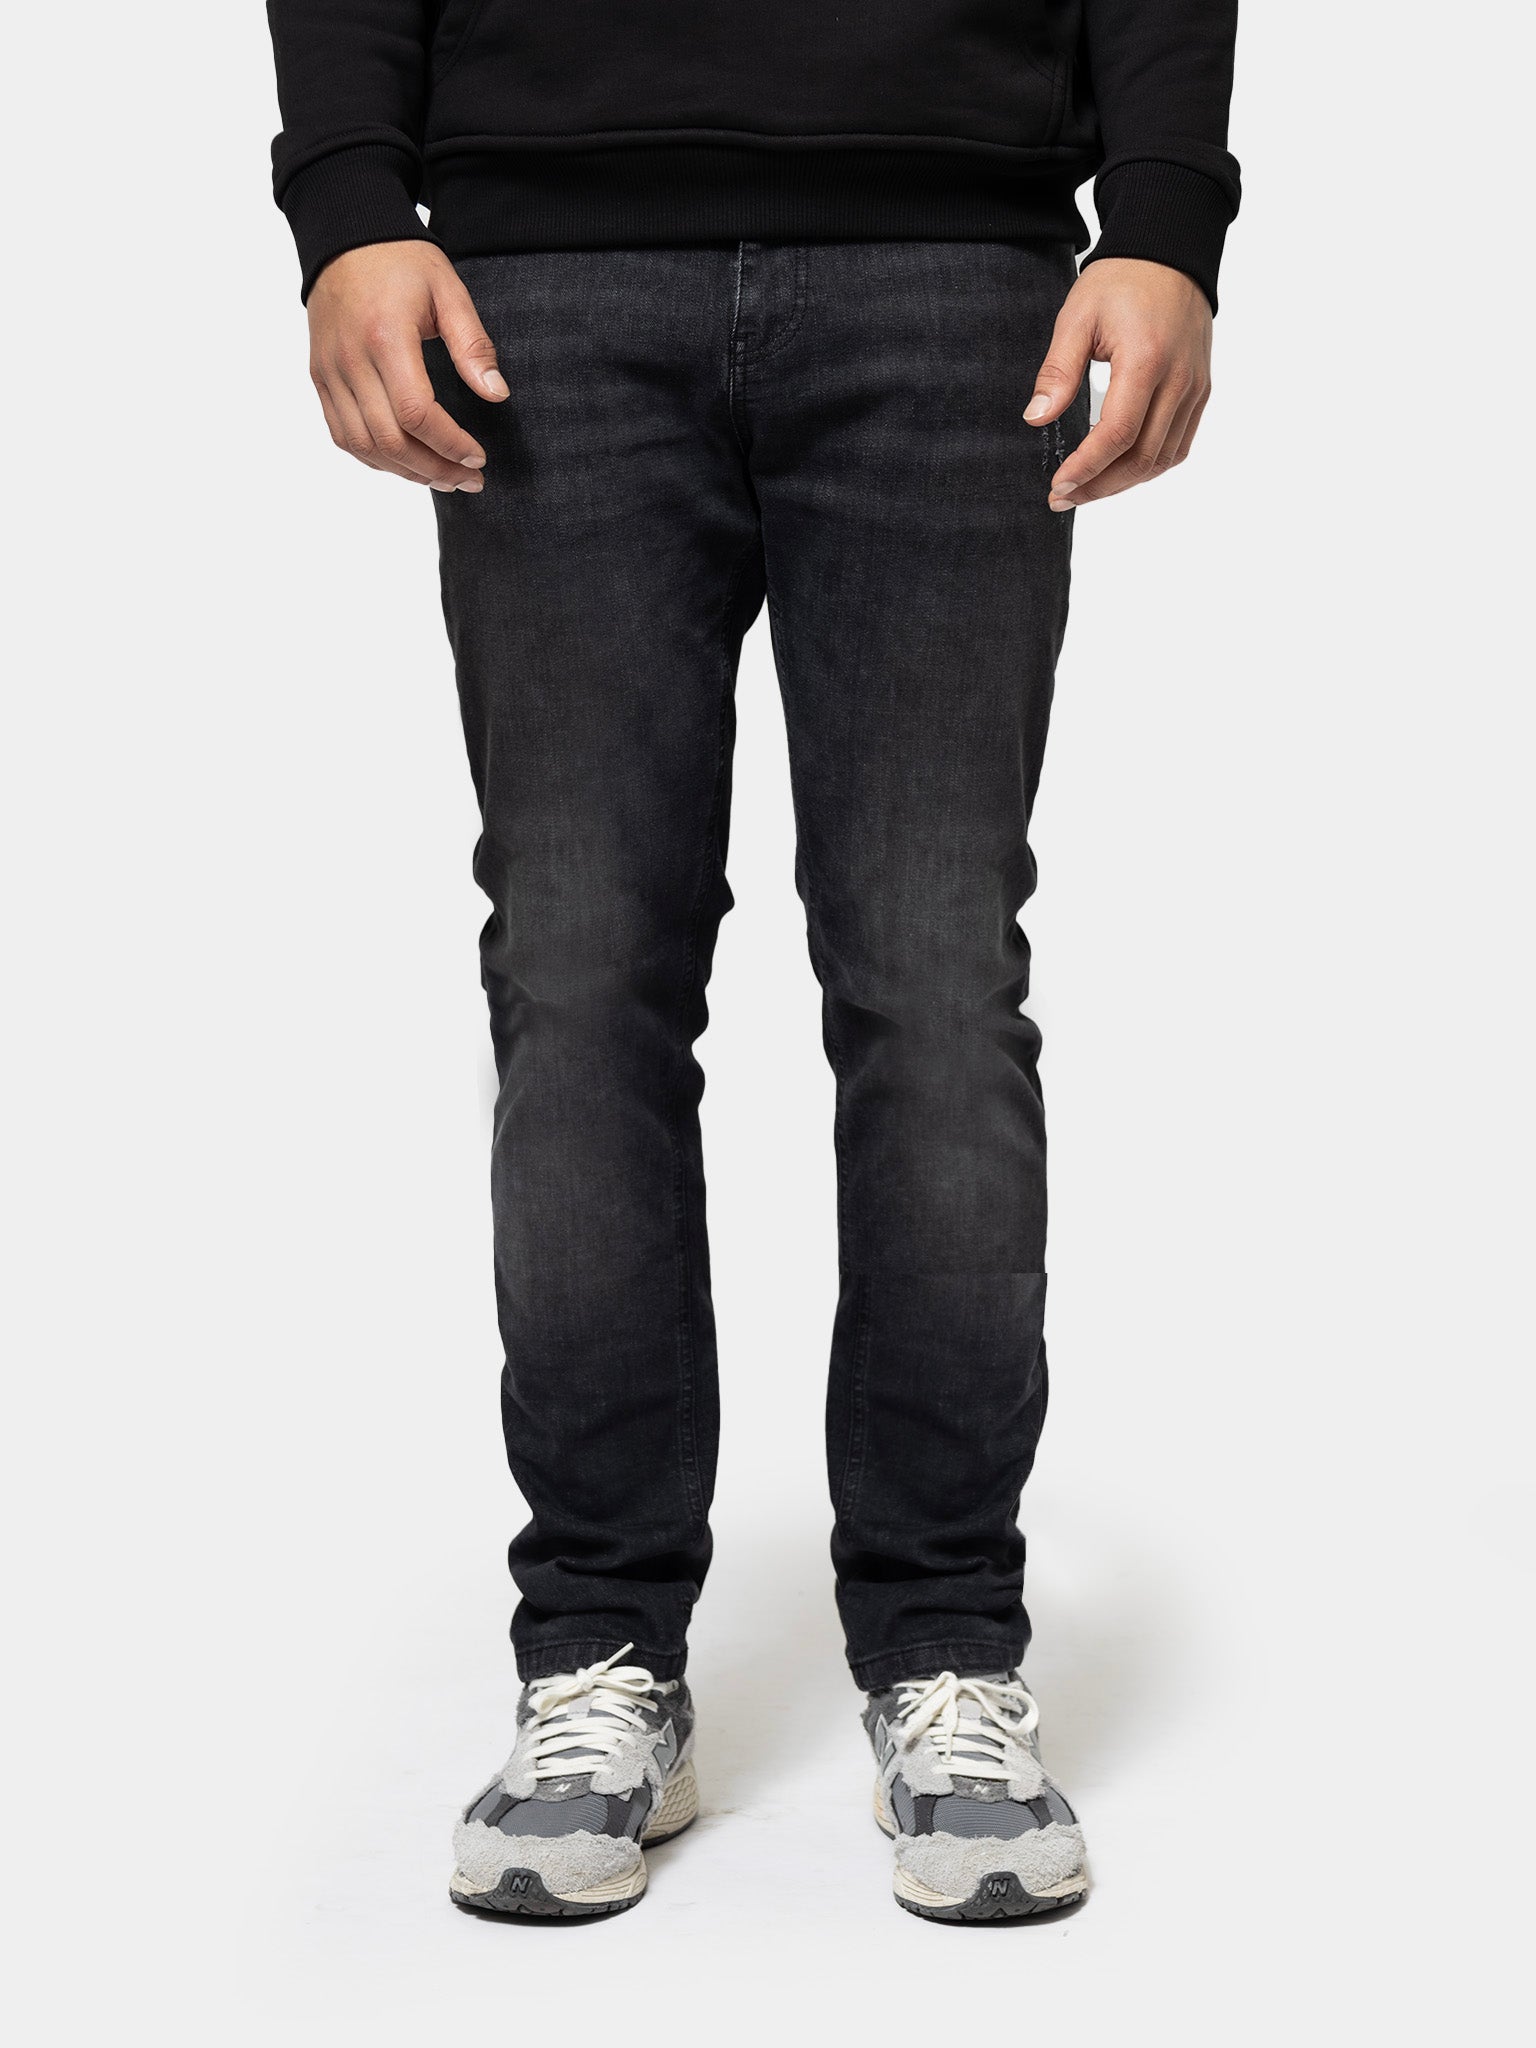 StudioJeans-black1.jpg